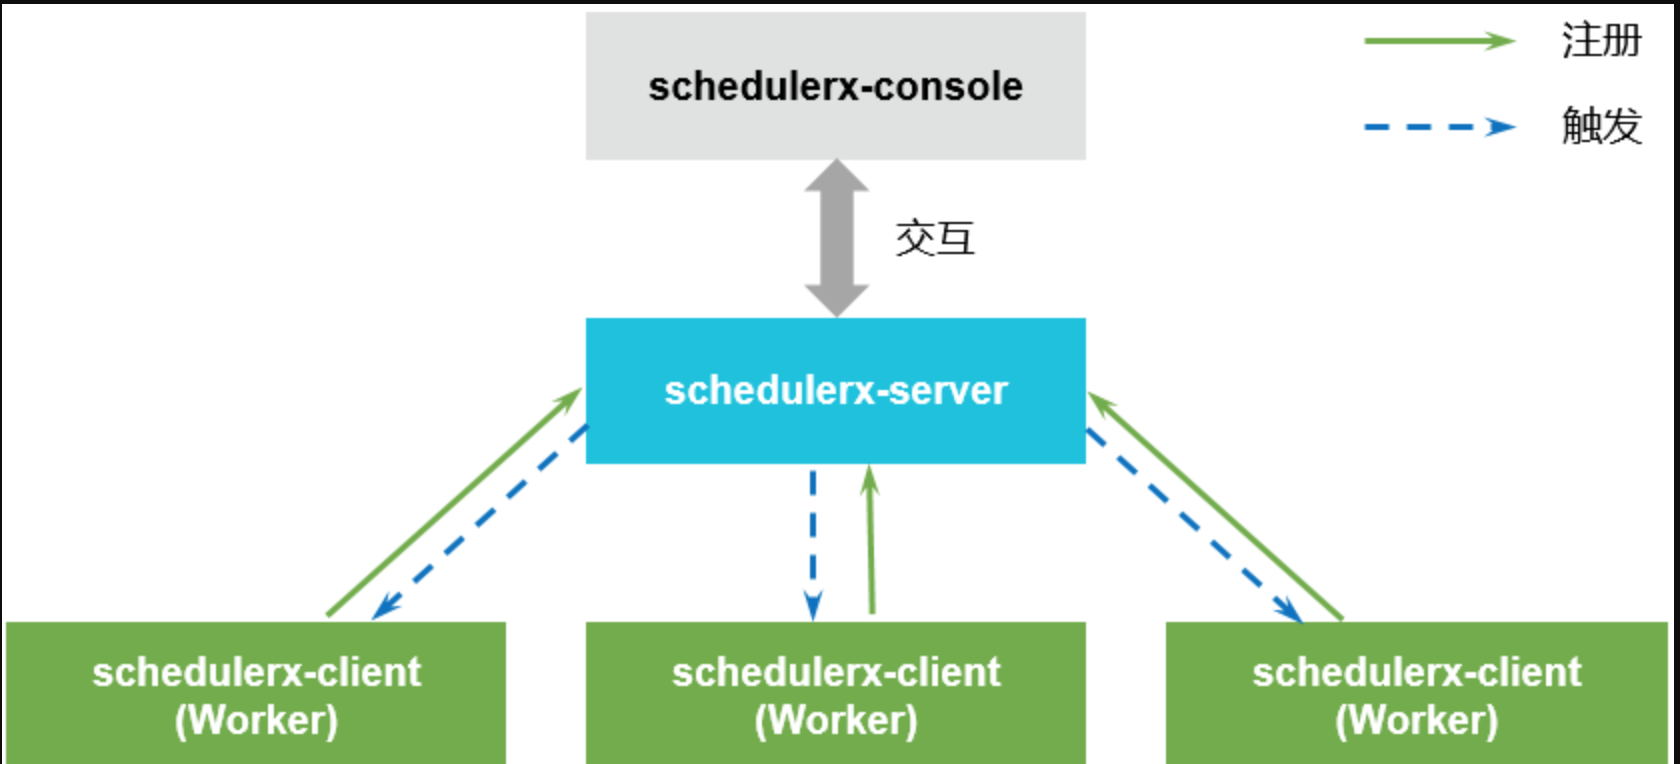 SchedulerX 1.0 architecture diagram